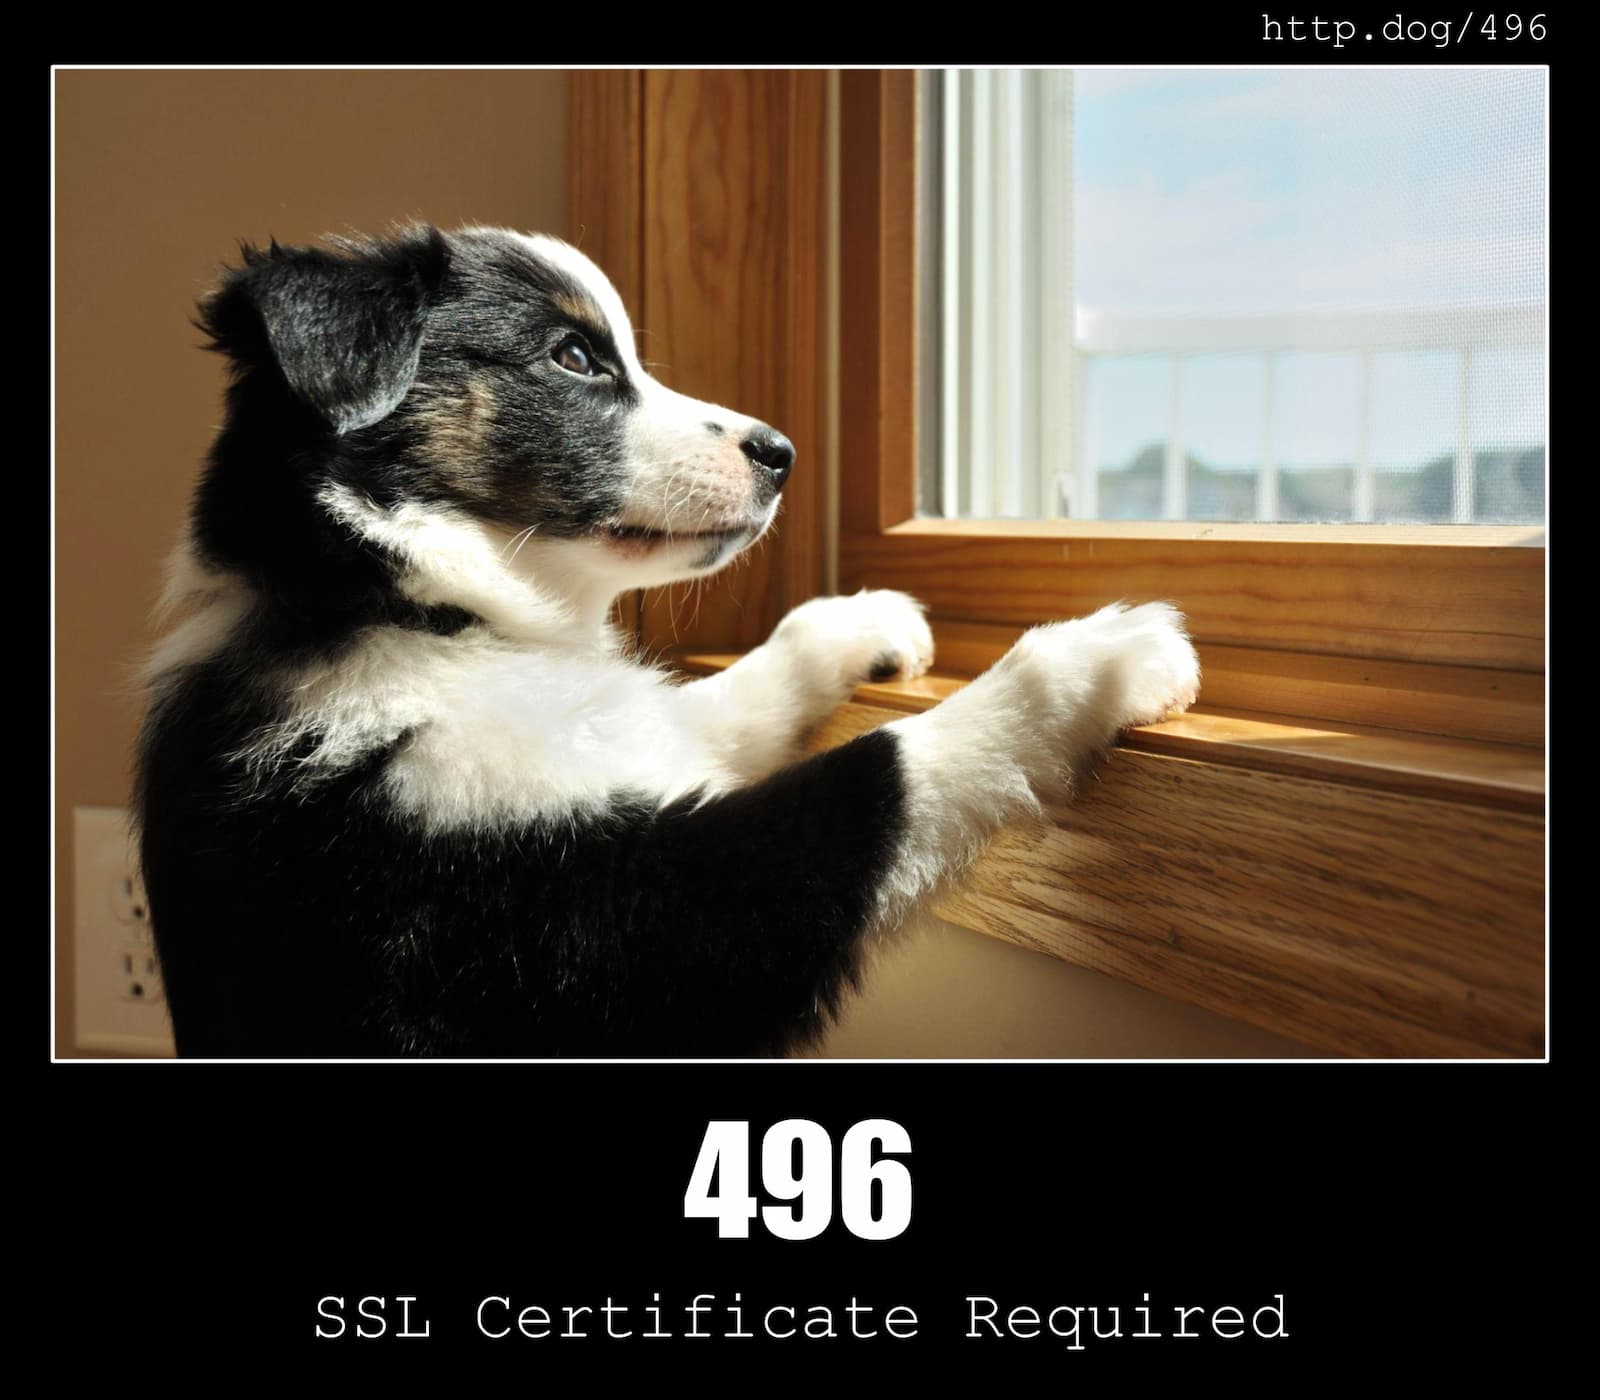 HTTP Status Code 496 SSL Certificate Required